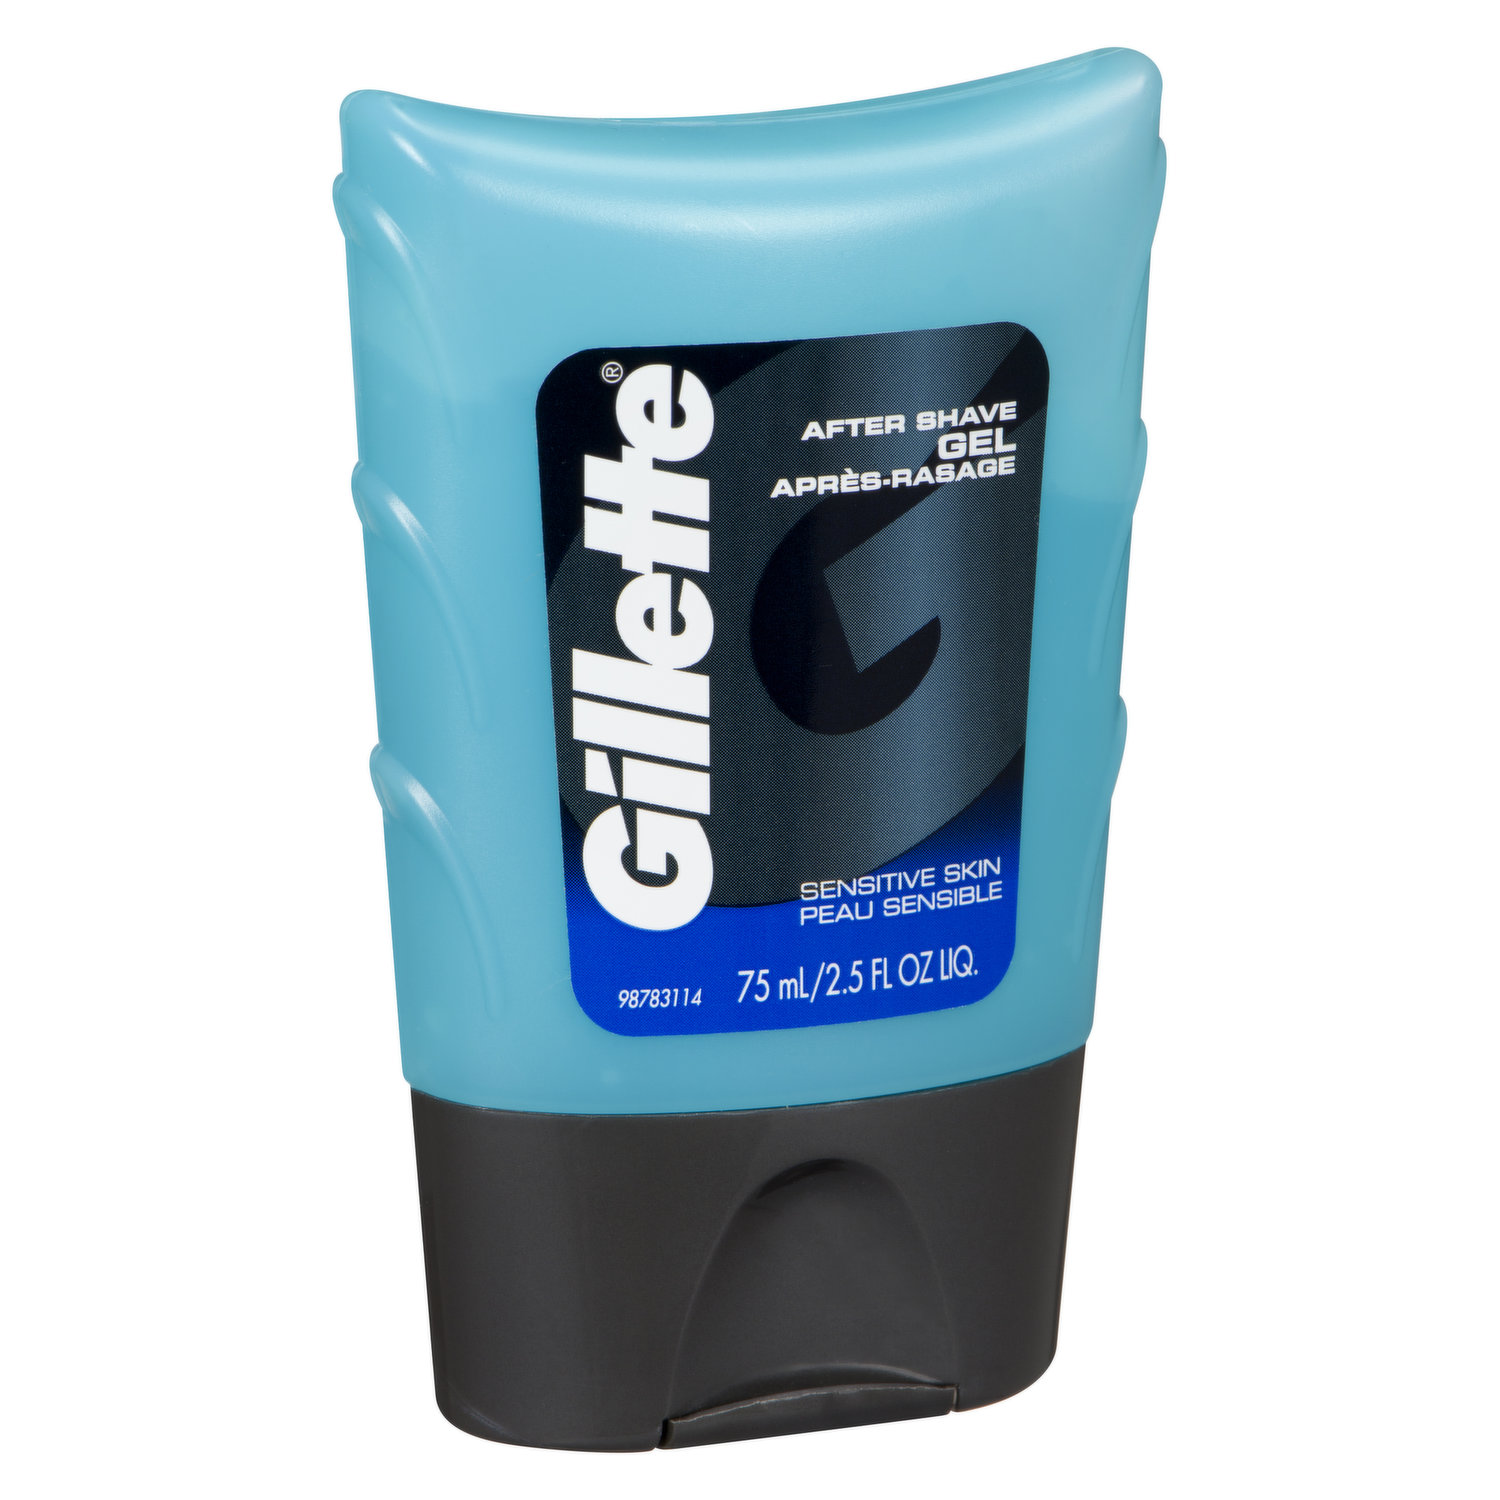 Gillette Shaving Gel: The Sensible Choice for Sensitive Skin